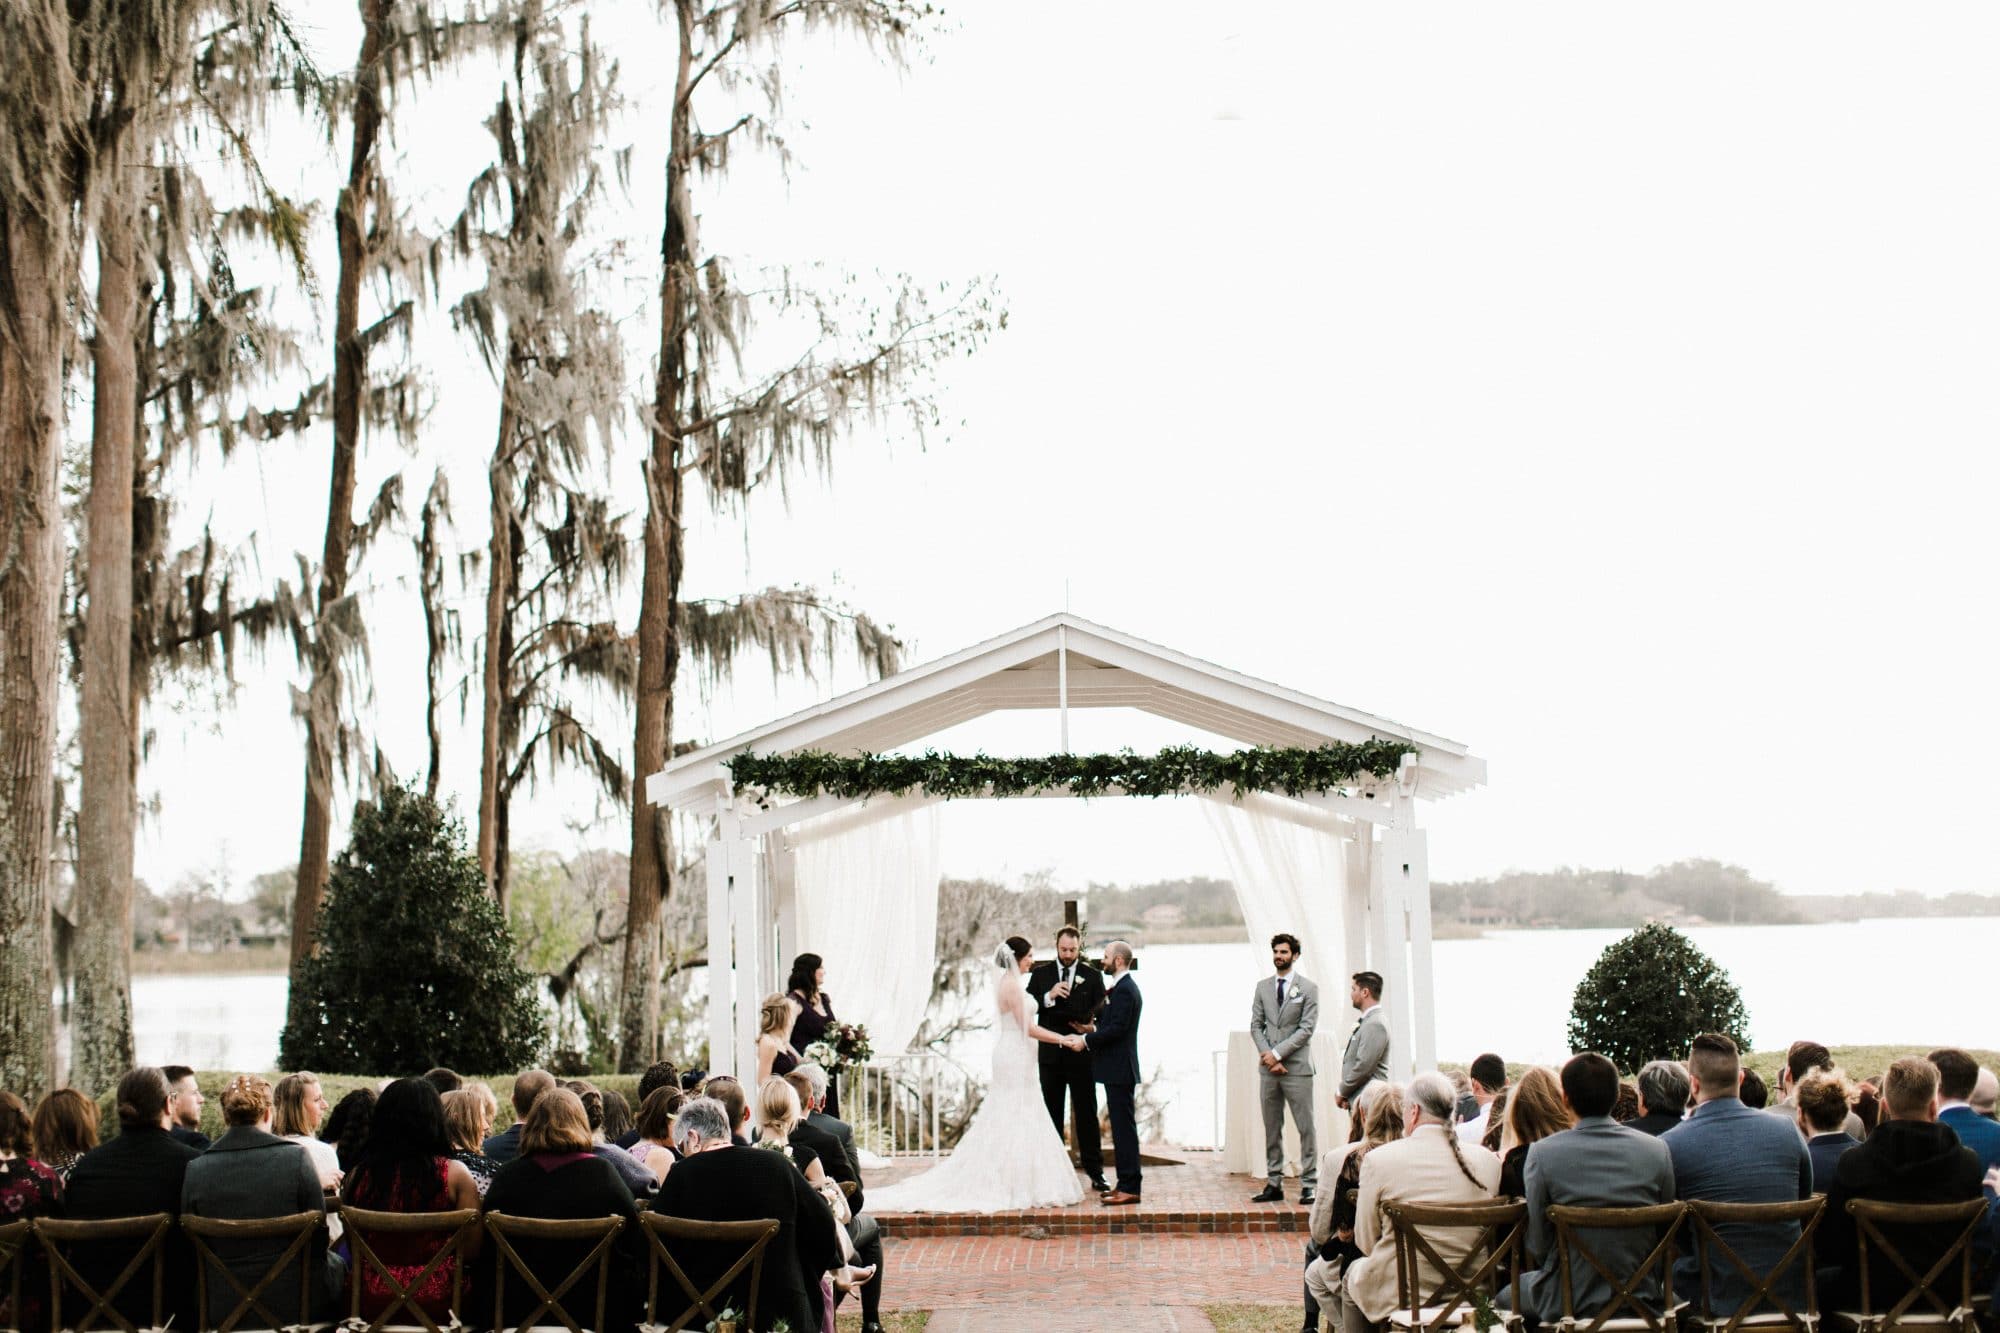 Cypress Grove Estate House - wedding ceremony under cute pavilion